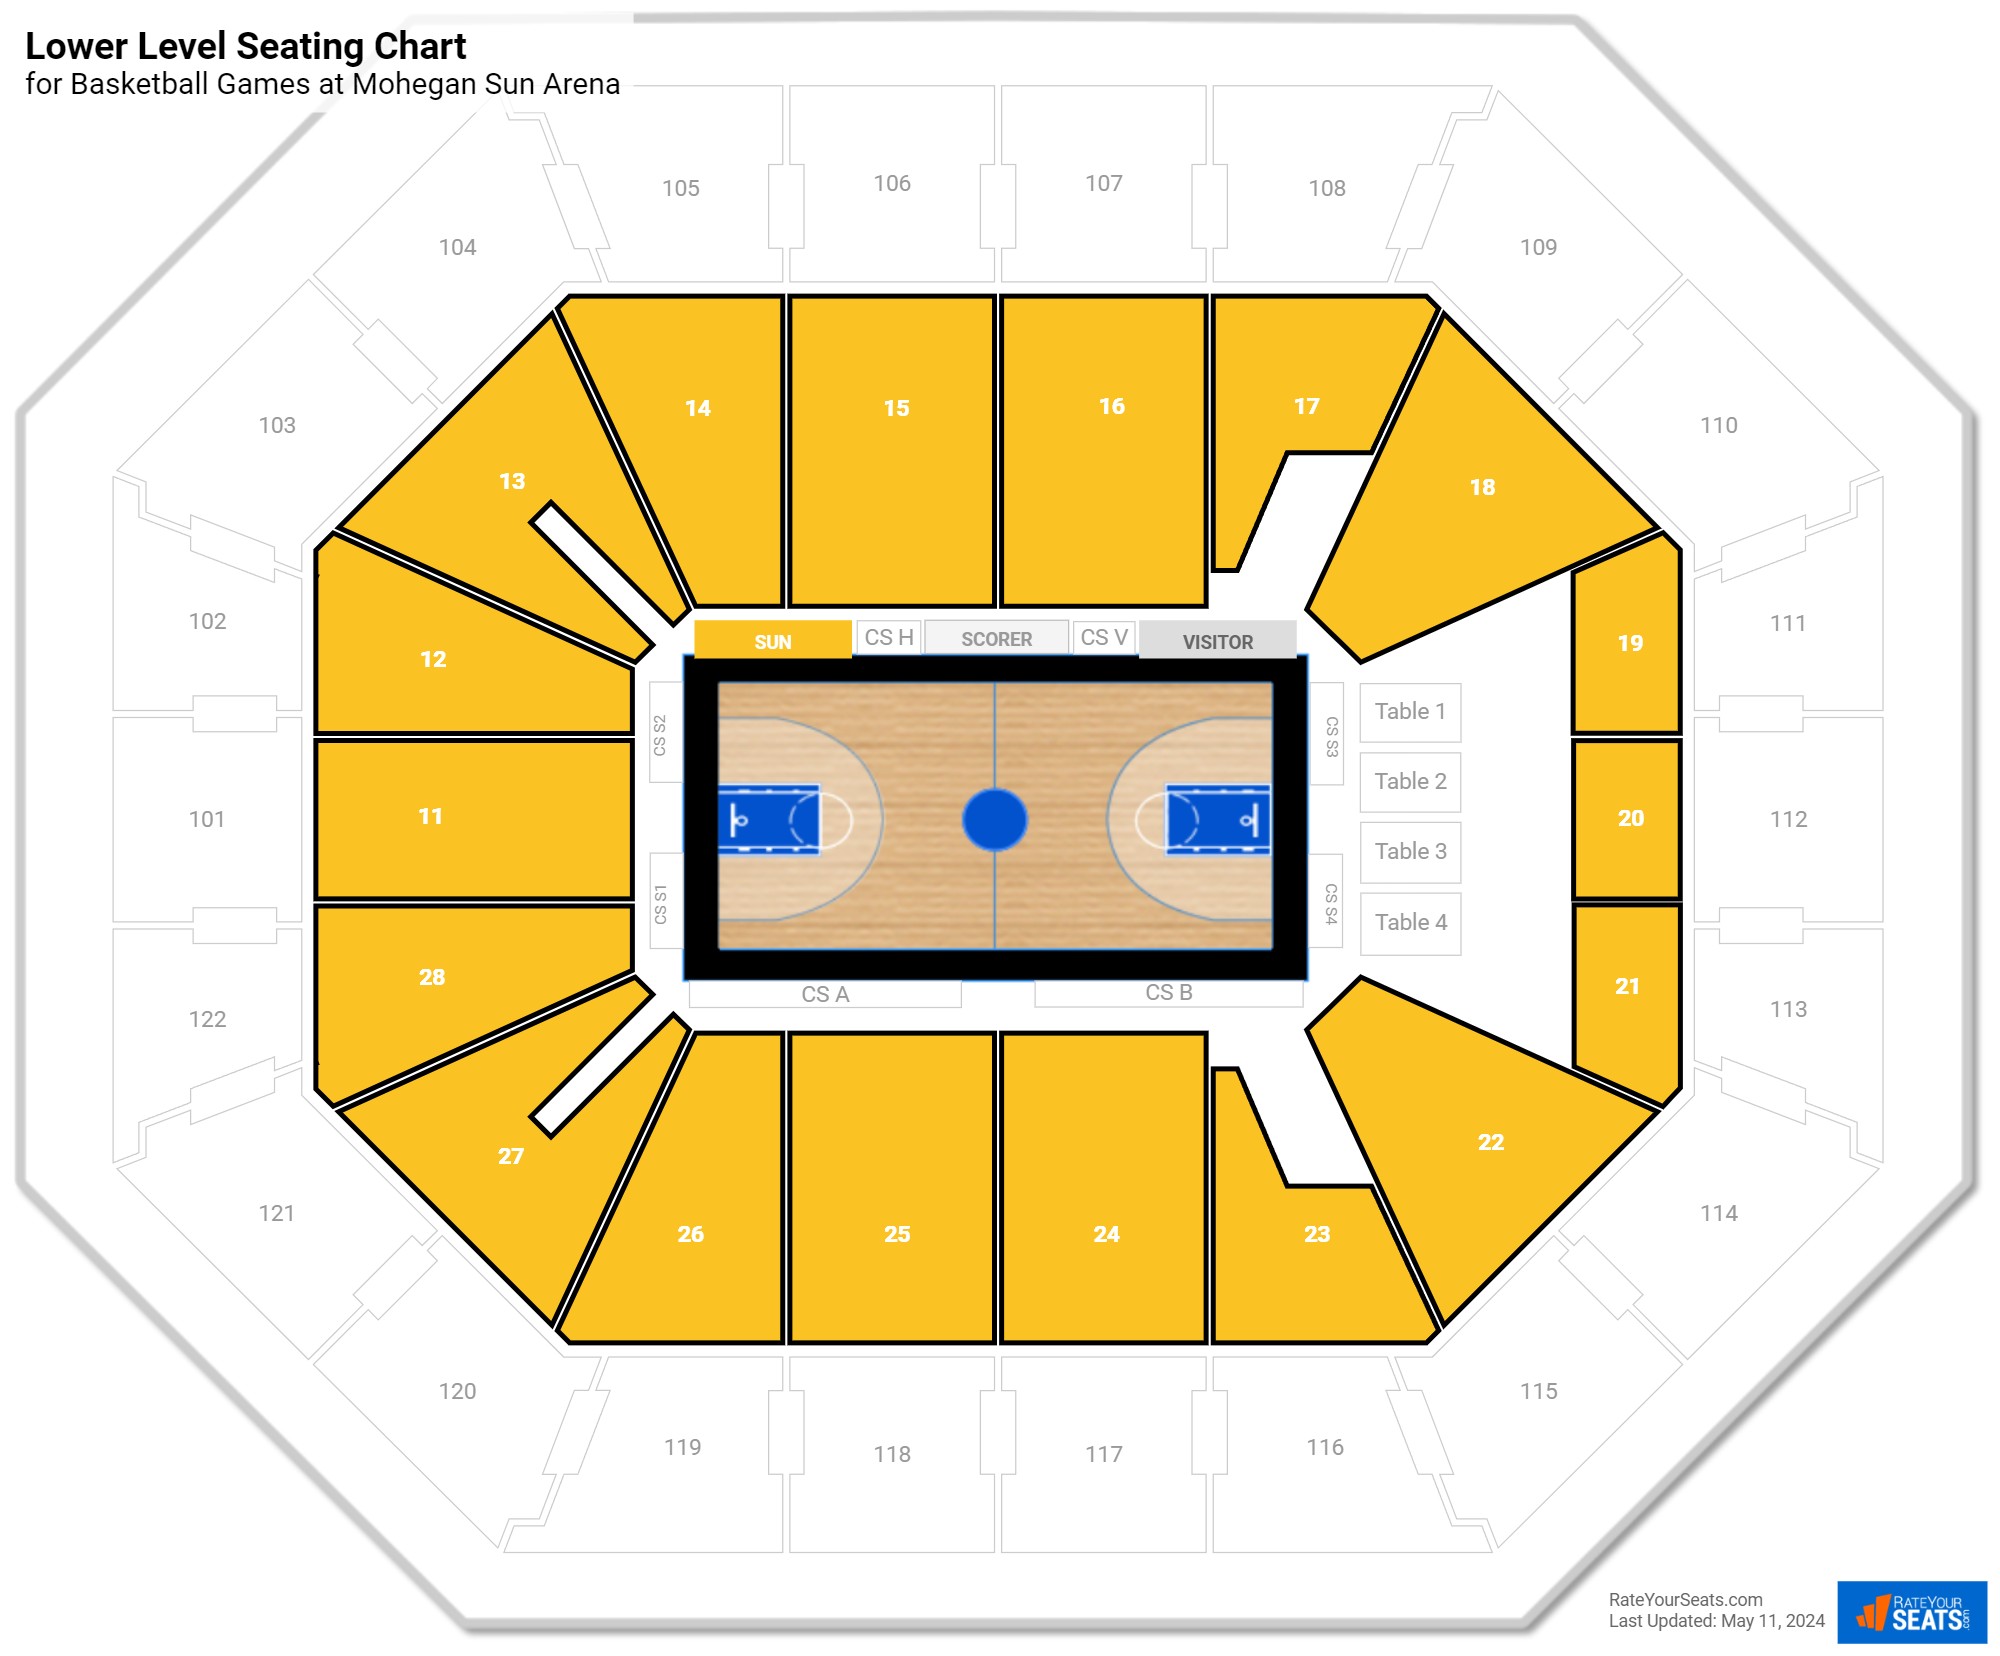 Mohegan Sun Arena Lower Level